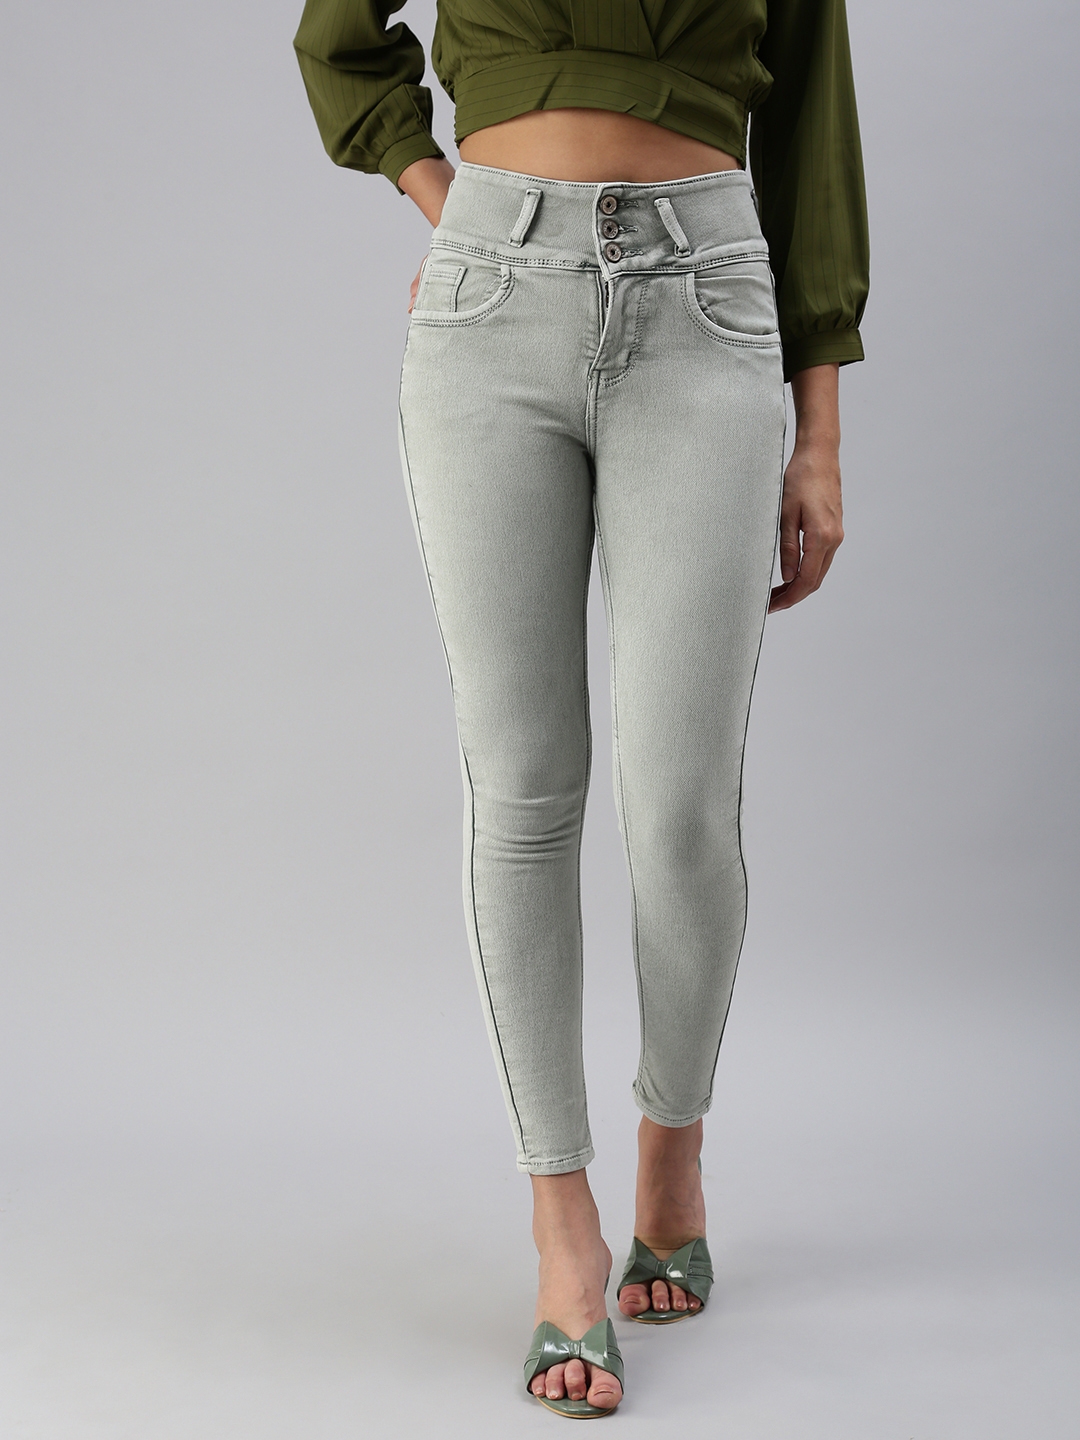 Showoff | SHOWOFF Women's Clean Look Green Skinny Fit Denim Jeans